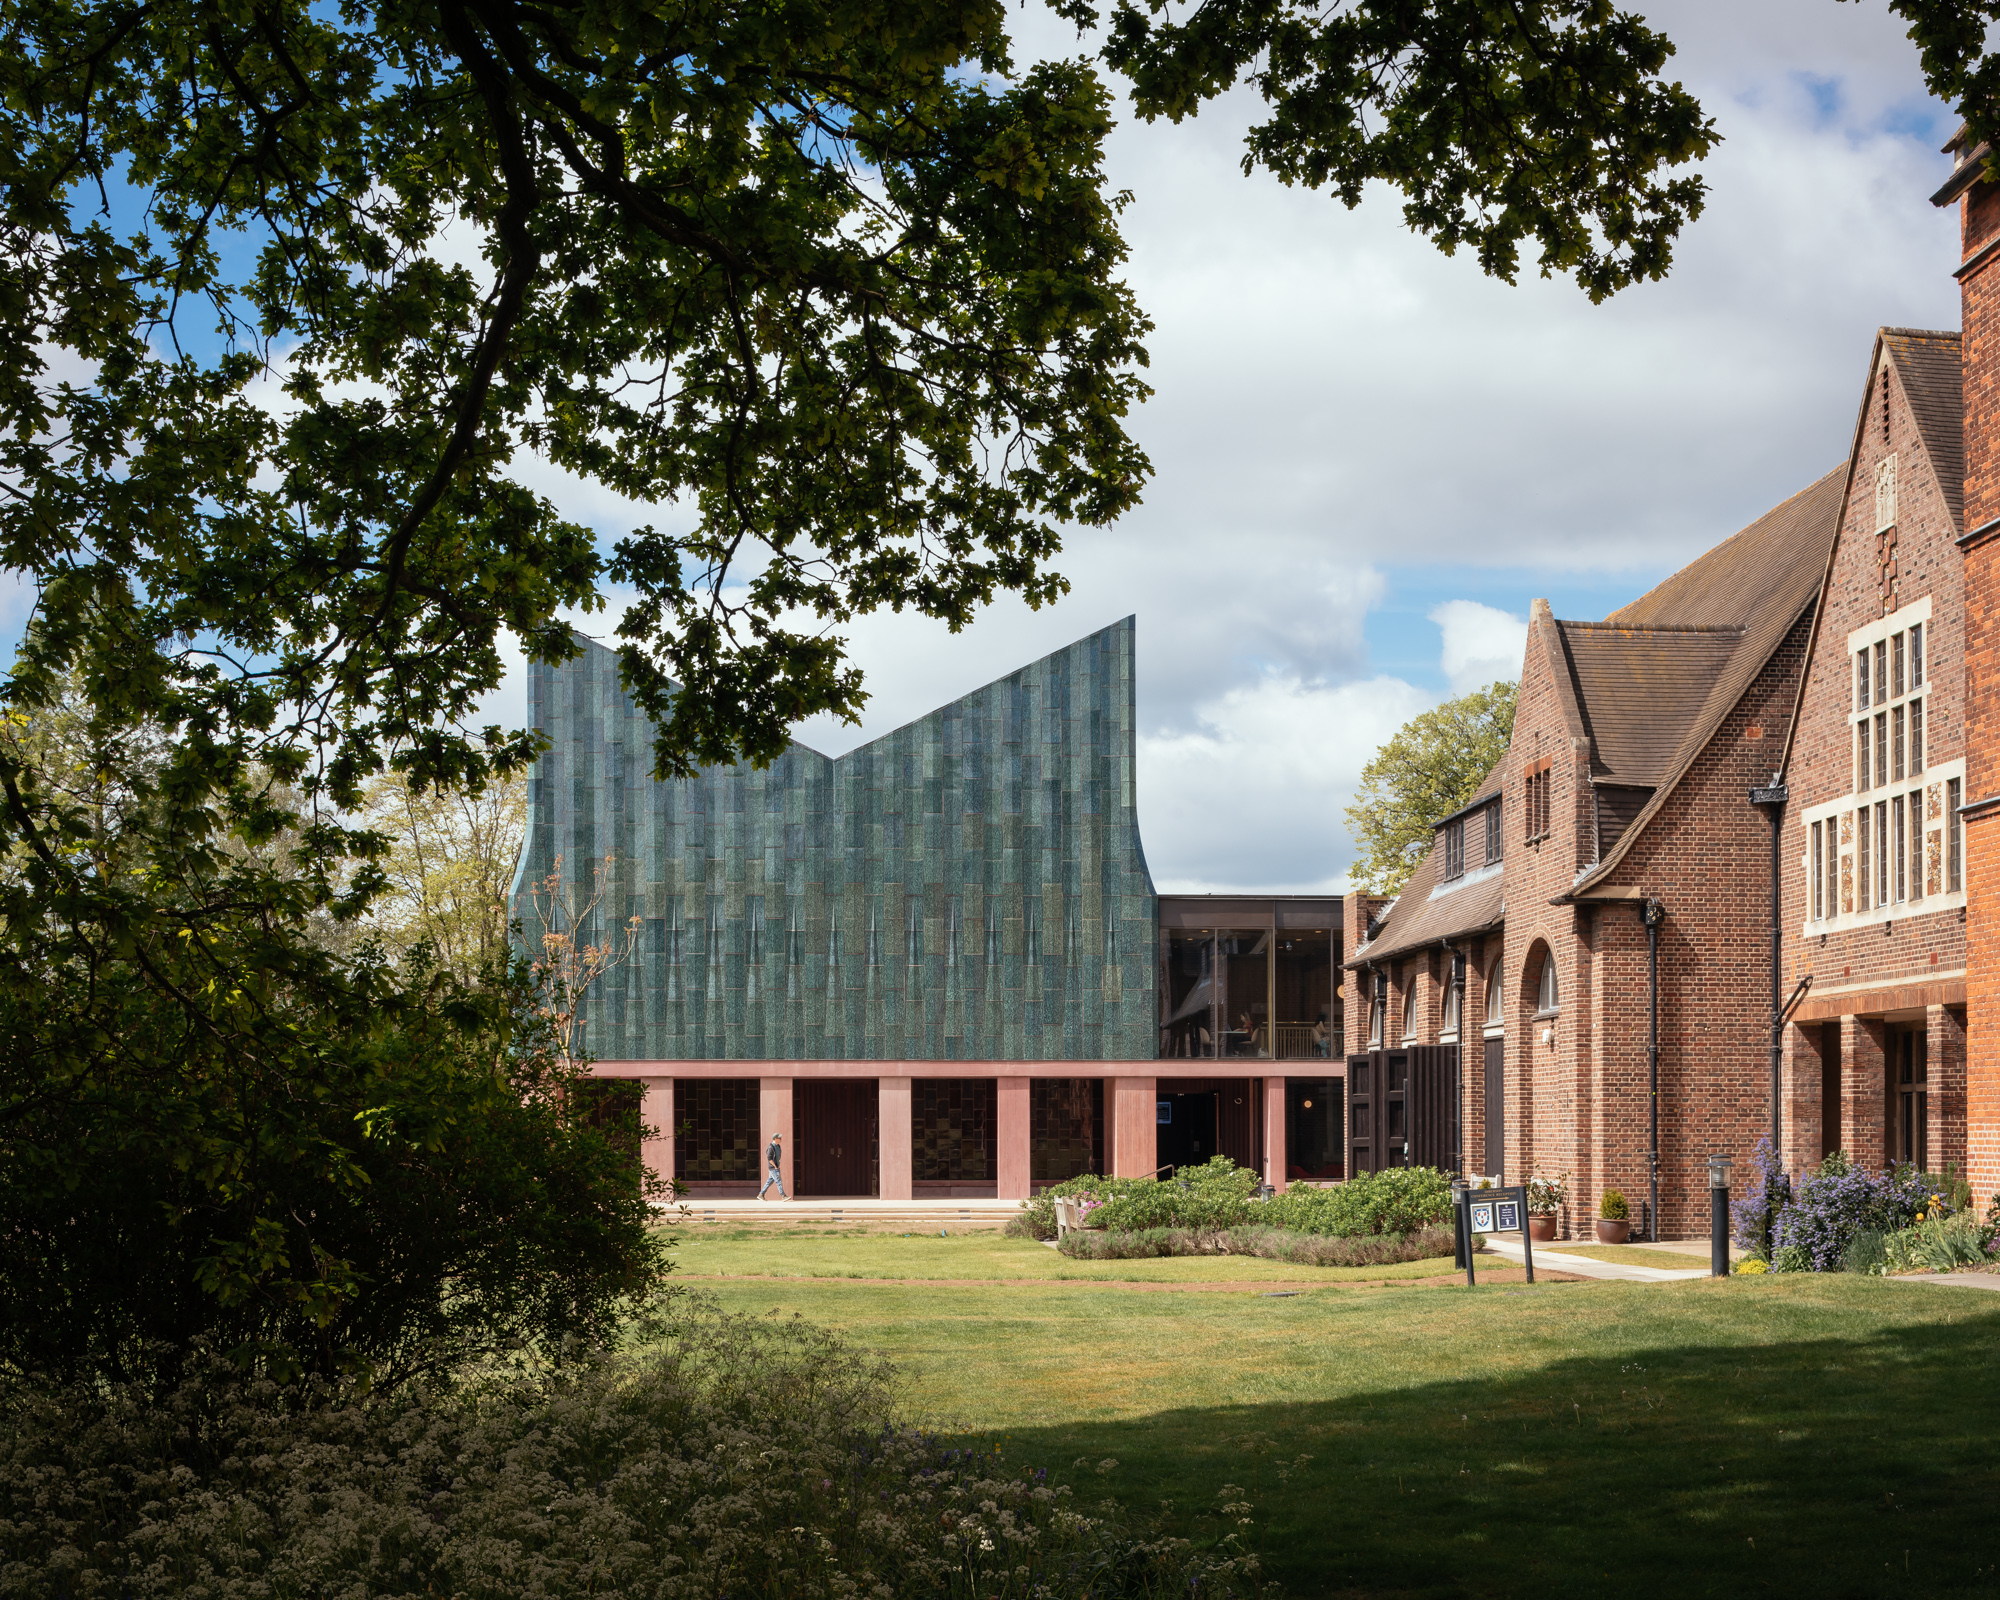 Homerton College by Feilden Fowles. Copyright Jim Stephenson 2022